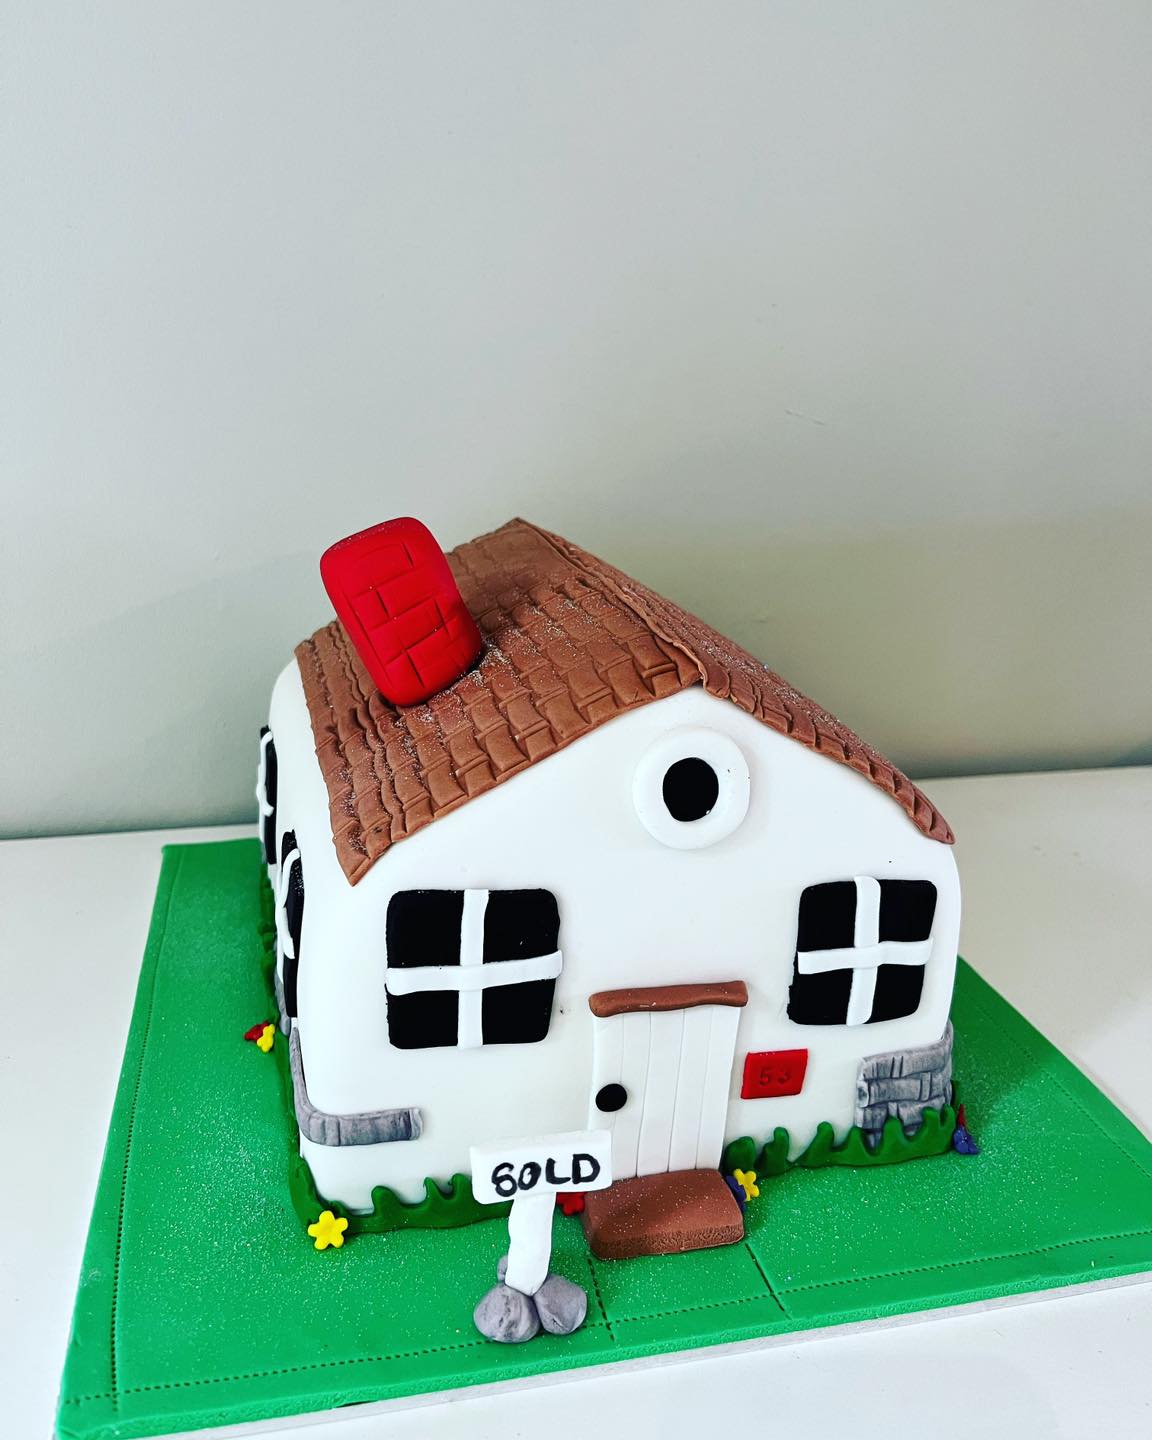 House cake, cape town cakes, novelty cakes, birthday cakes, southern peninsula, cakes, house cake